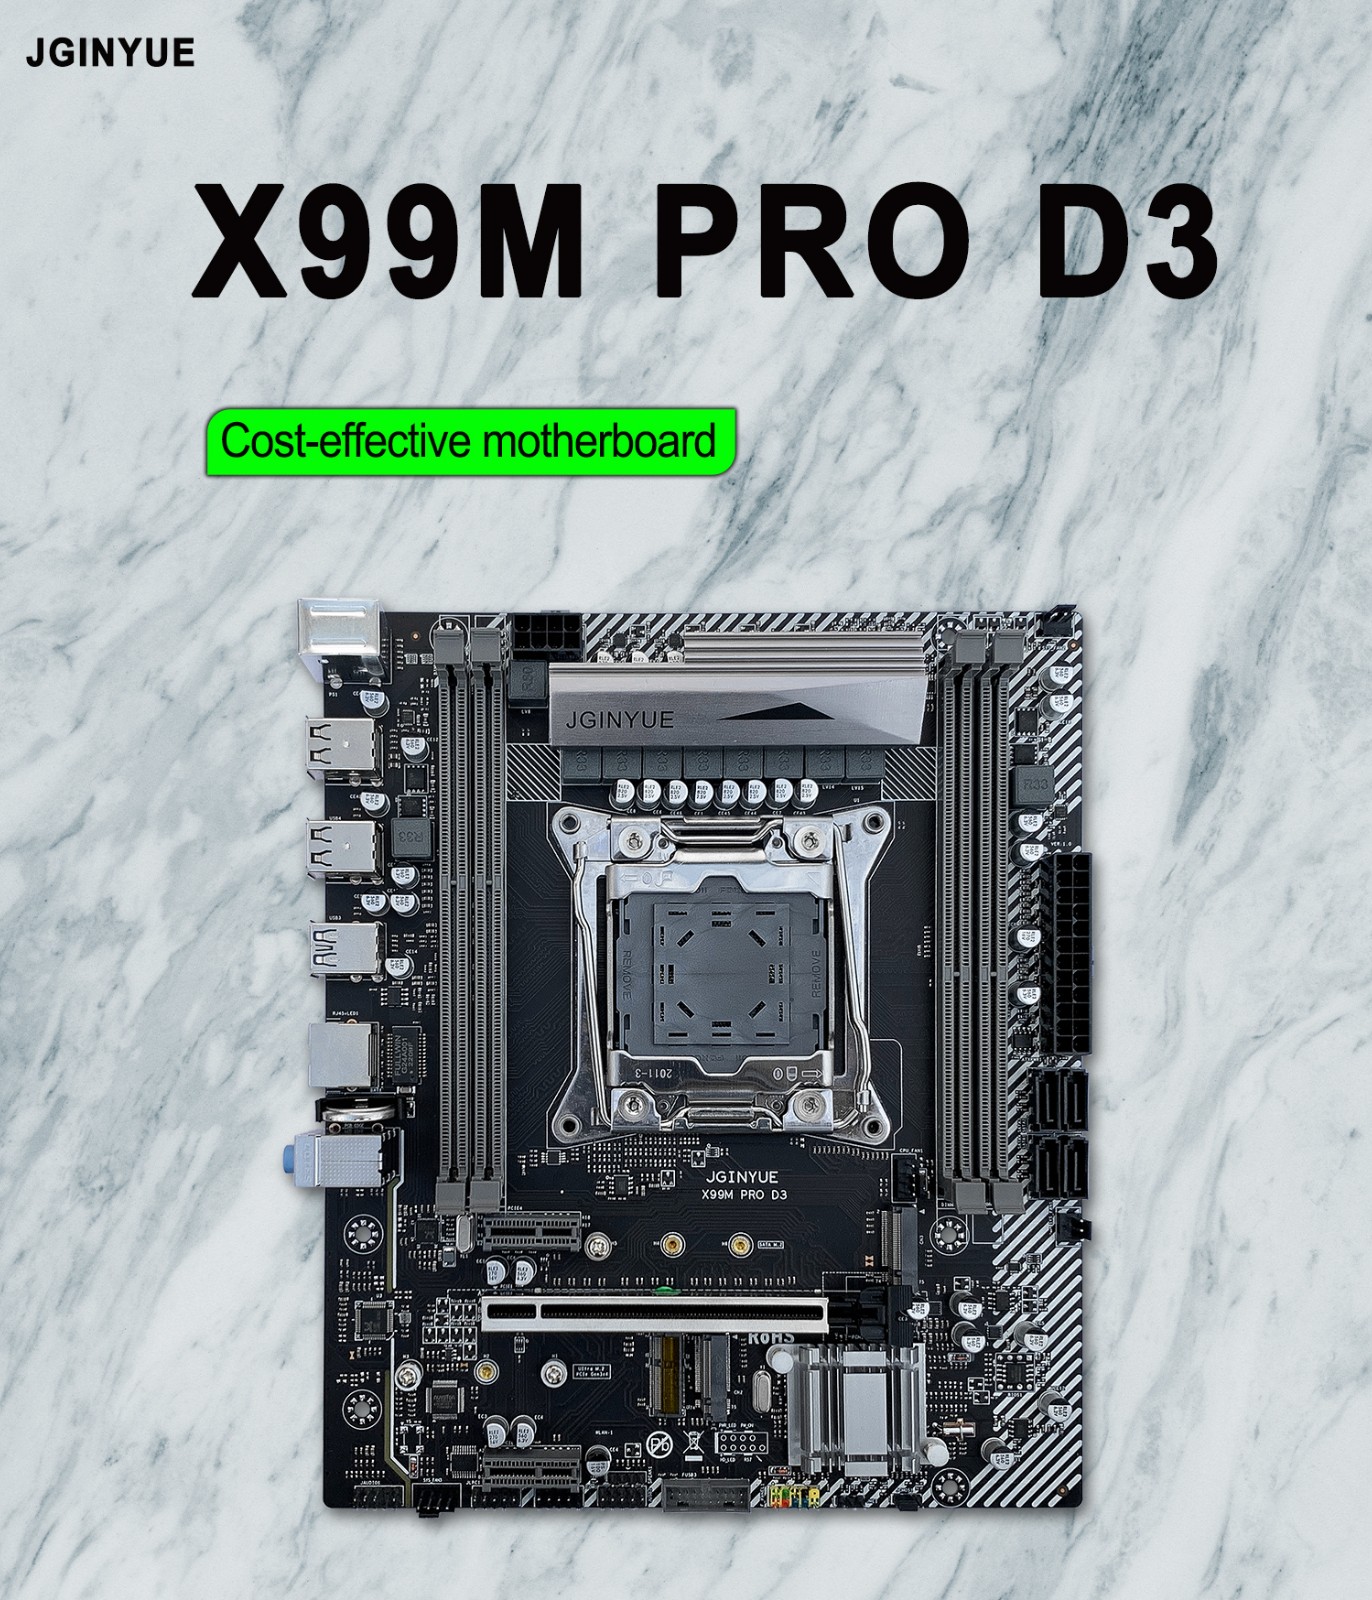 X99M PRO D3 motherboard